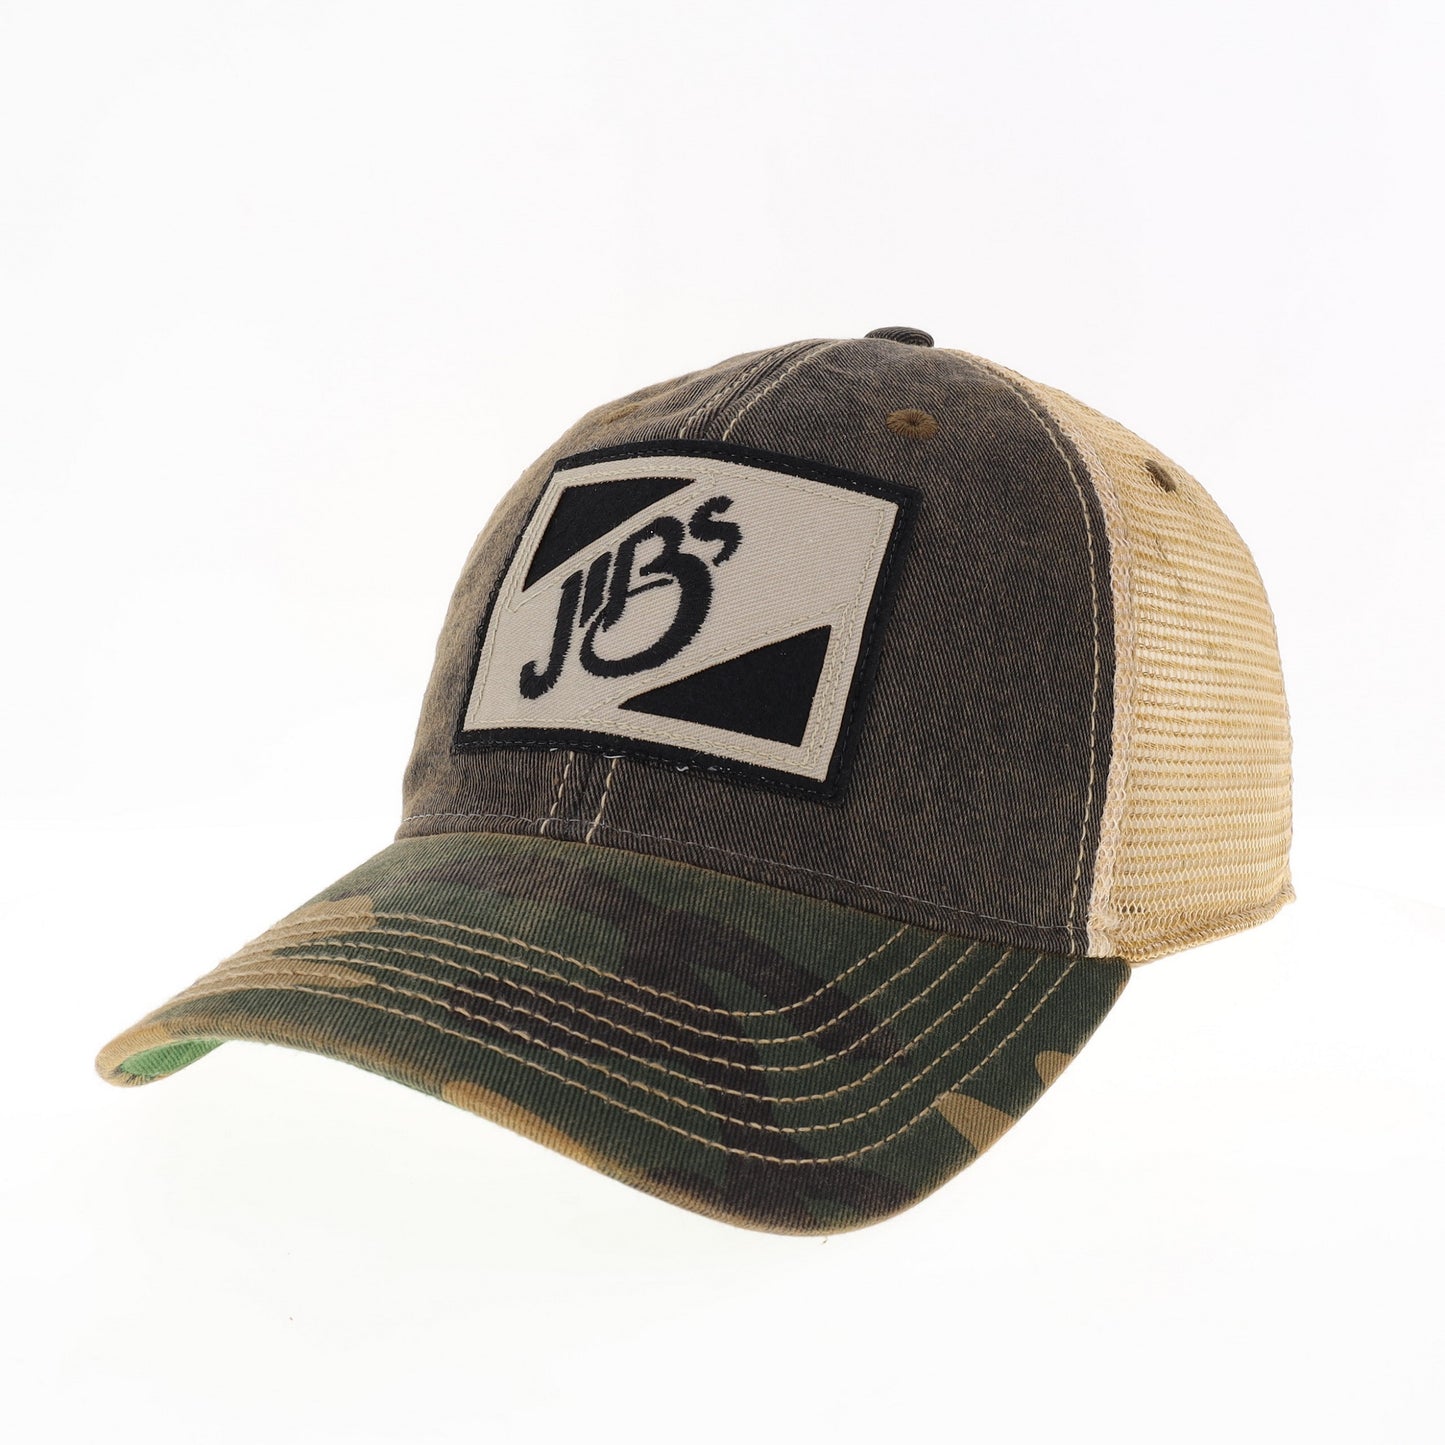 JIBS Old Favorite Trucker Adjustable Snap Back Hat Black/Army